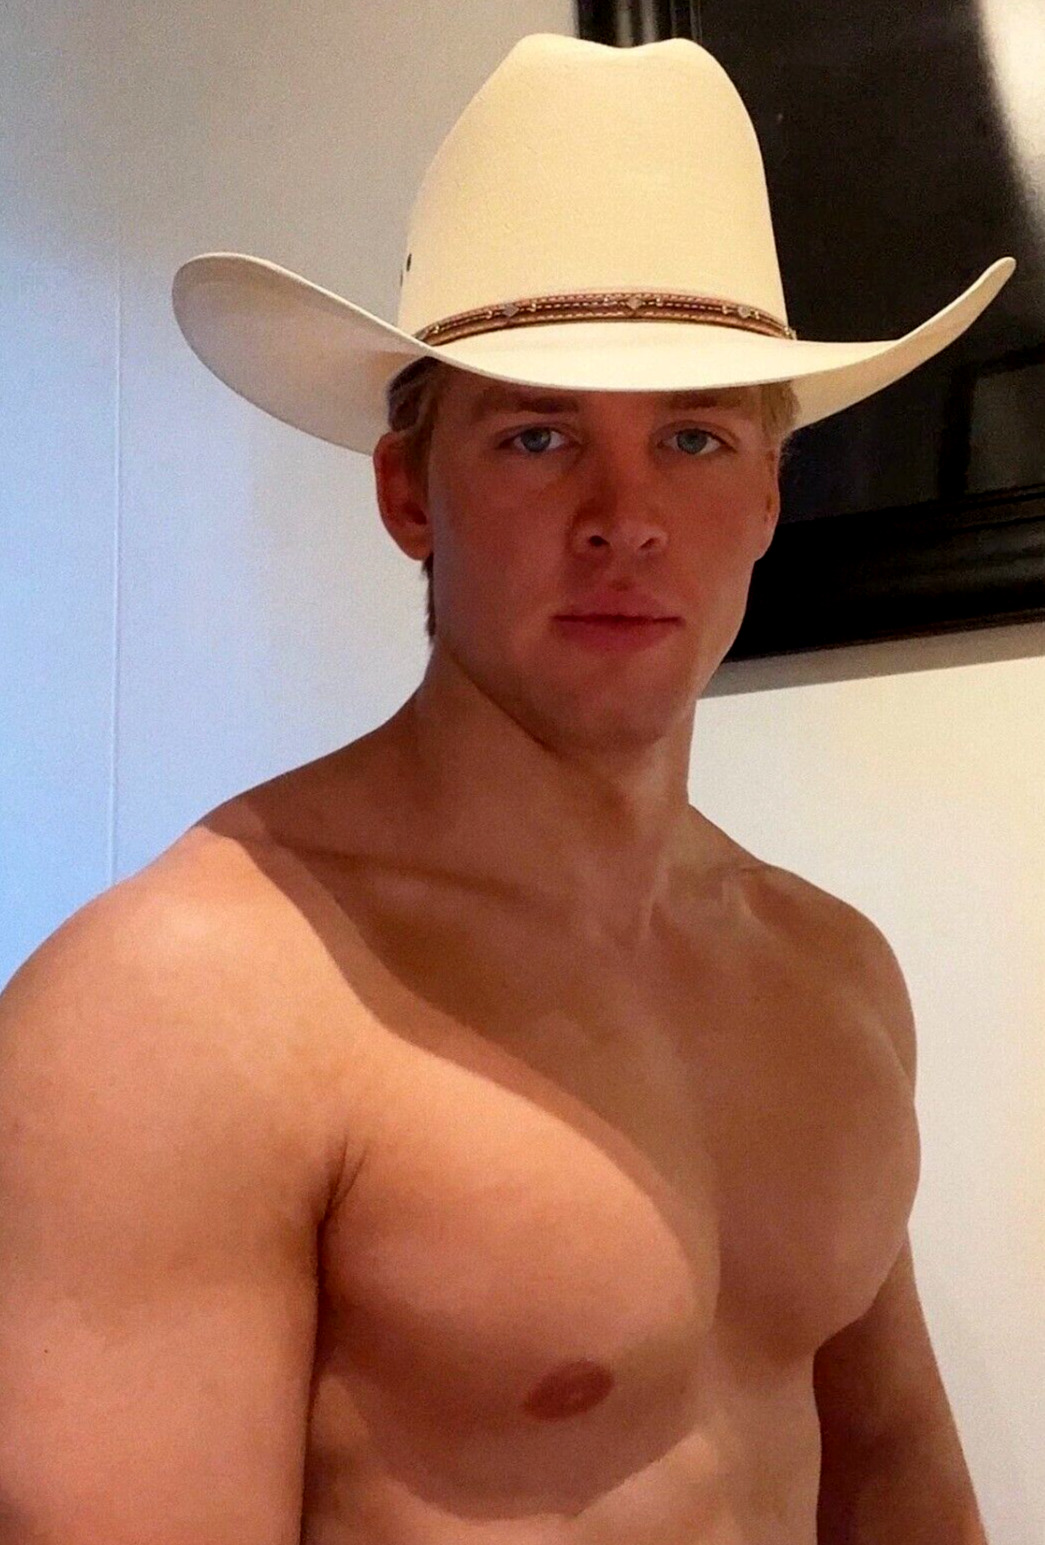 Shirtless Male Muscular Handsome Blond Cowboy Hat Beefcake Man PHOTO 4X6 E1965